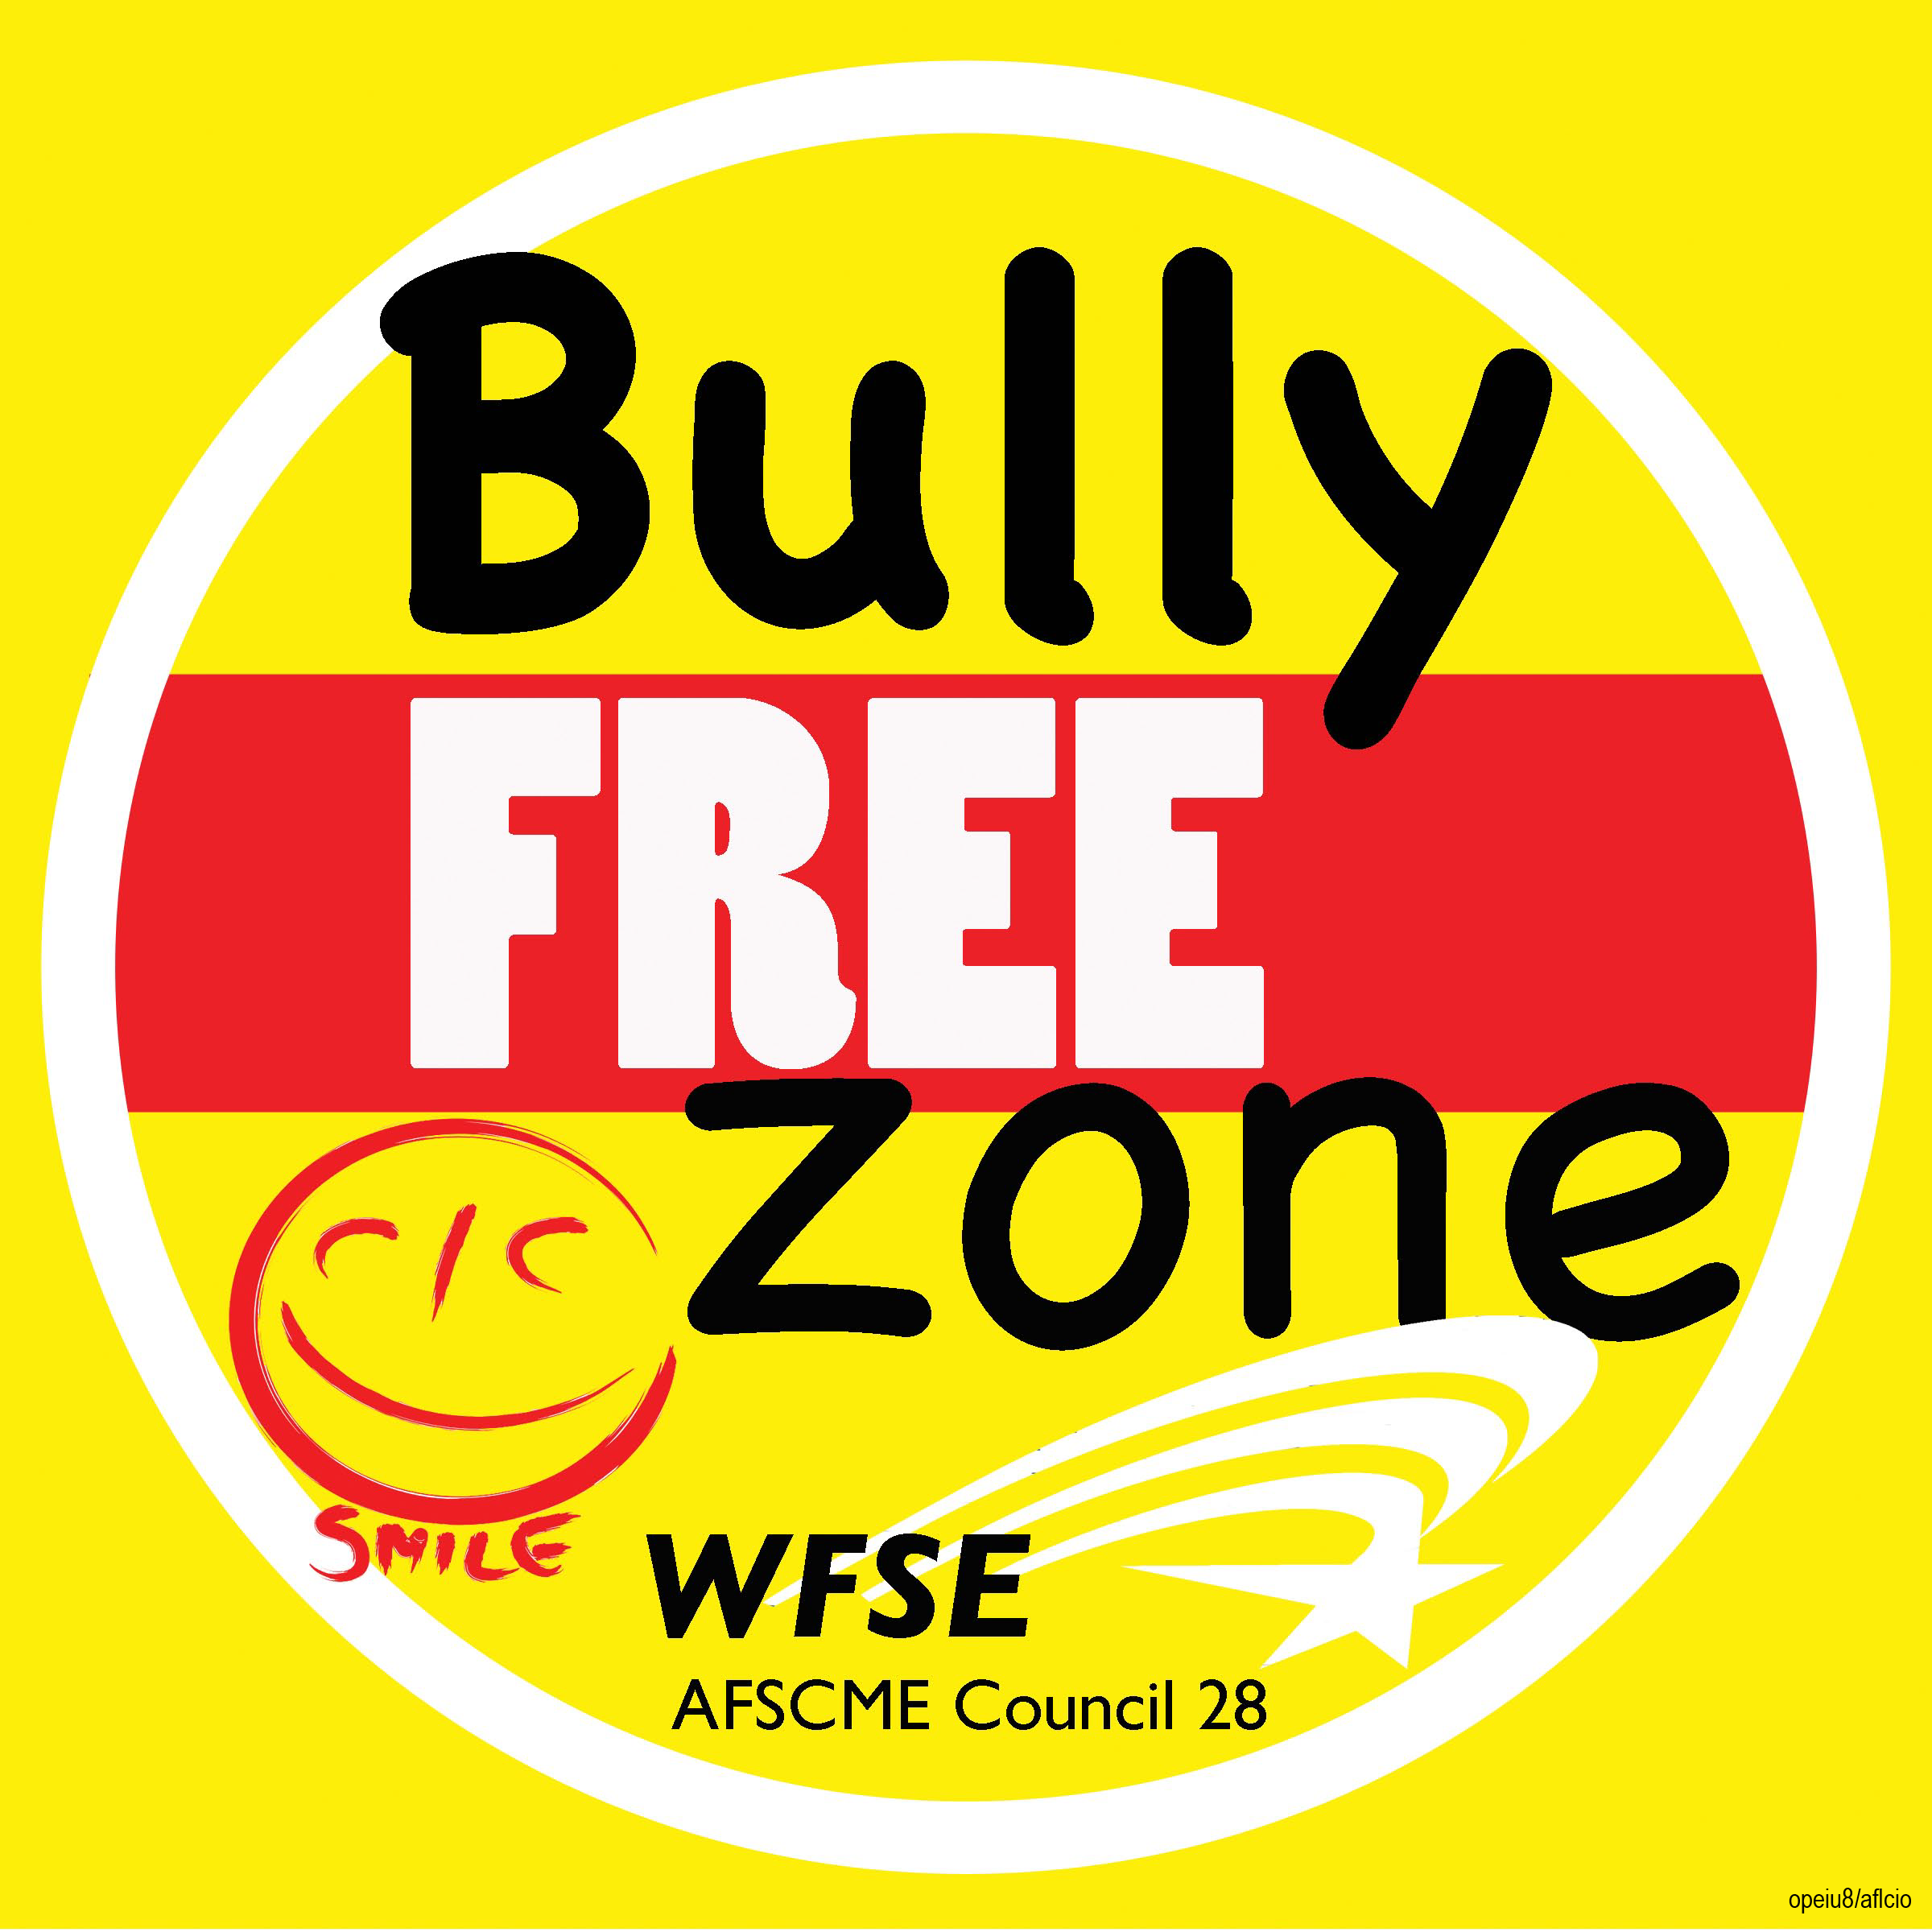 BullyFree Zone placard